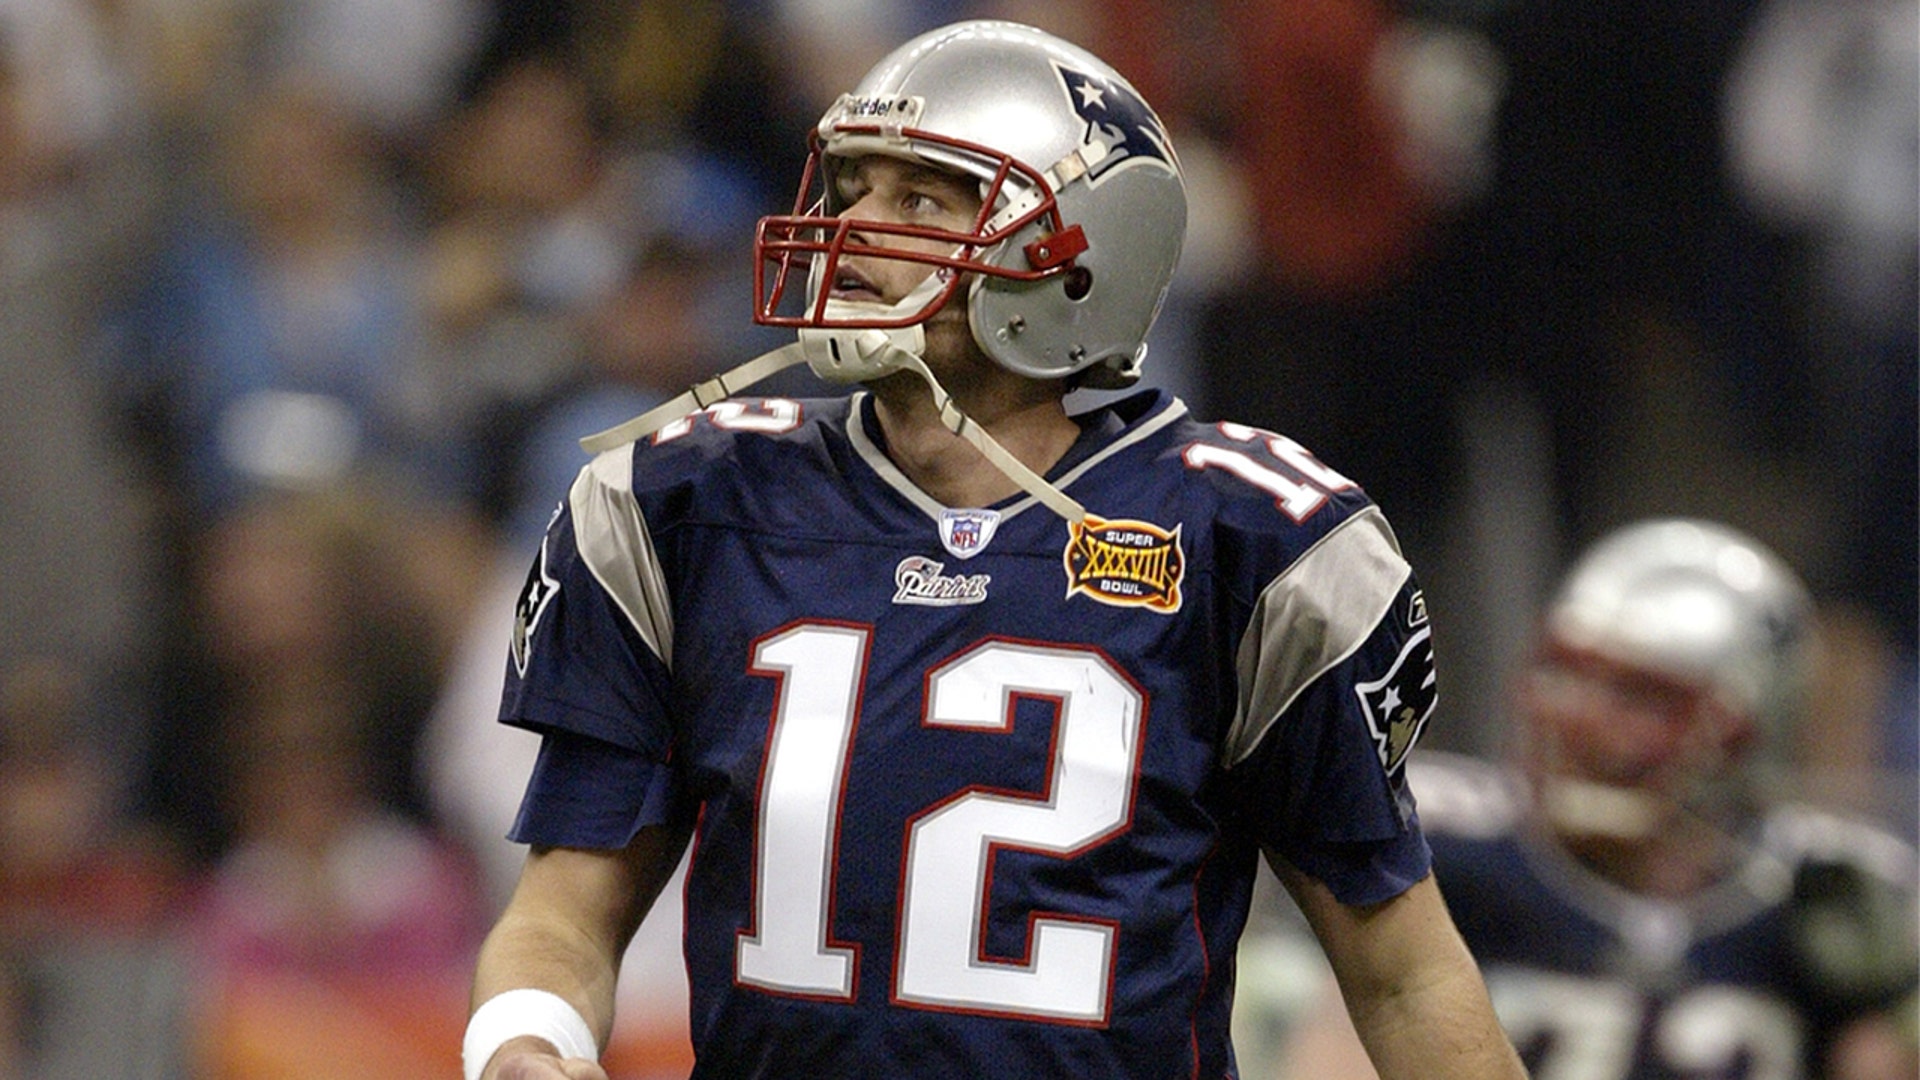 PHOTOS: Tom Brady to retire from NFL after legendary 22 seasons